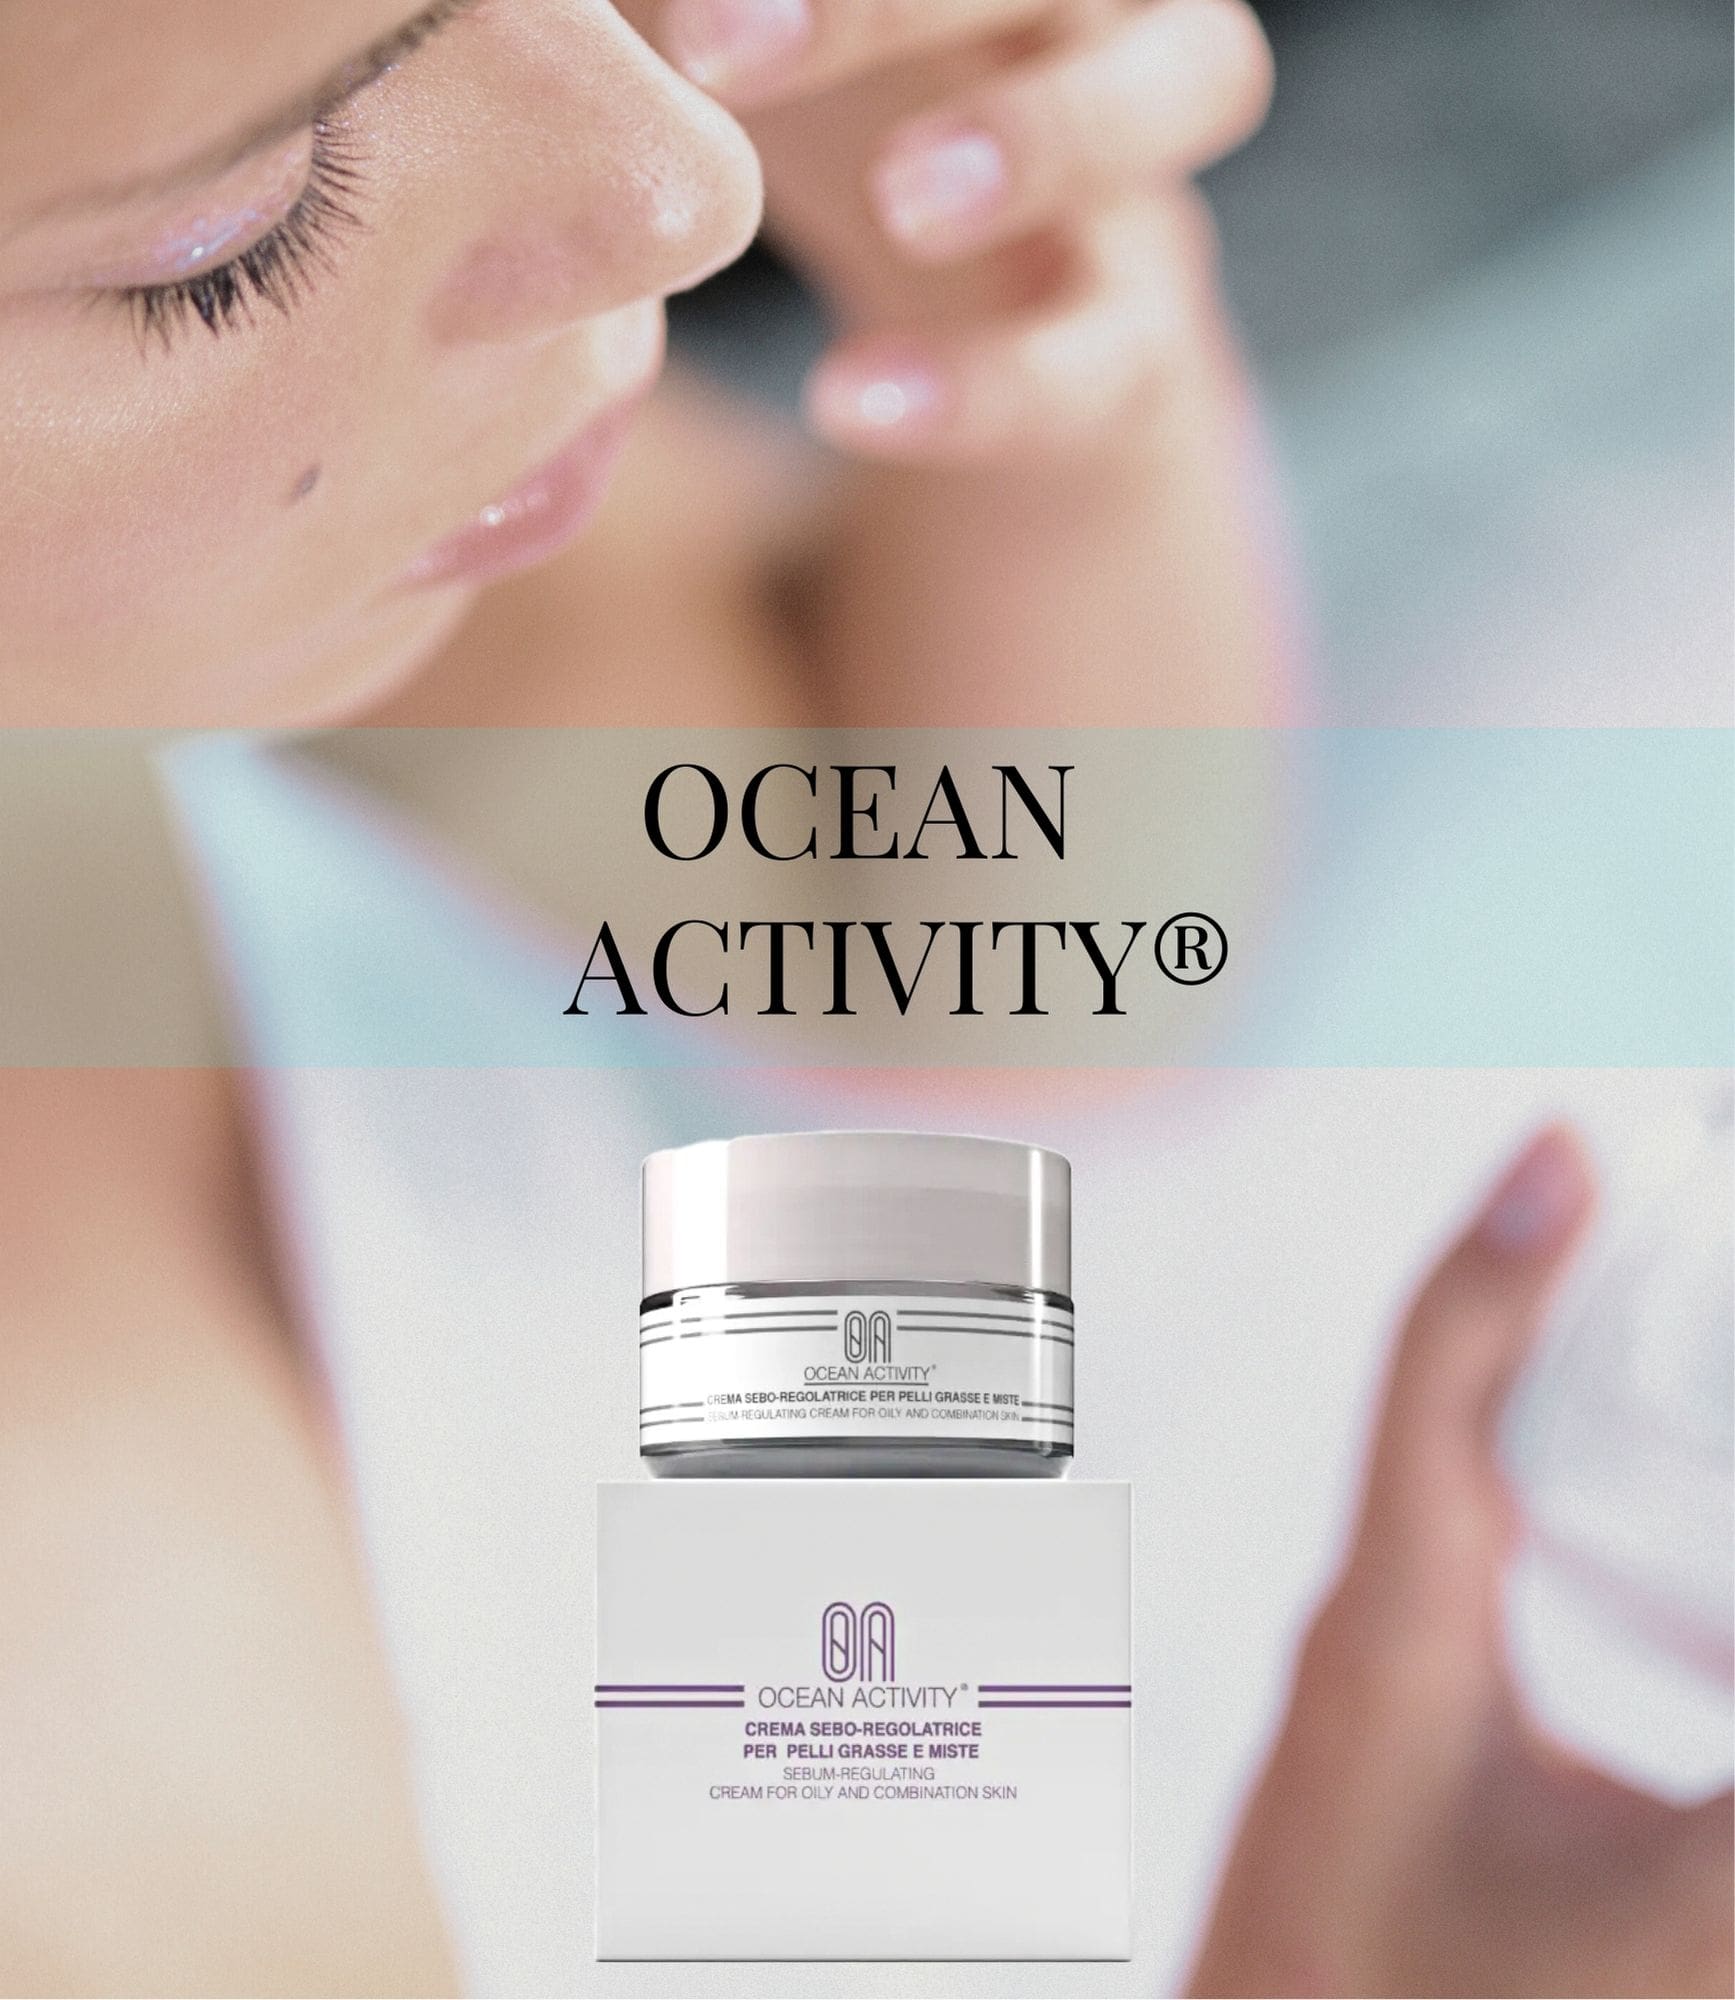 Ocean Activity® Sebum Regulating Cream for Oily and Combination Skin